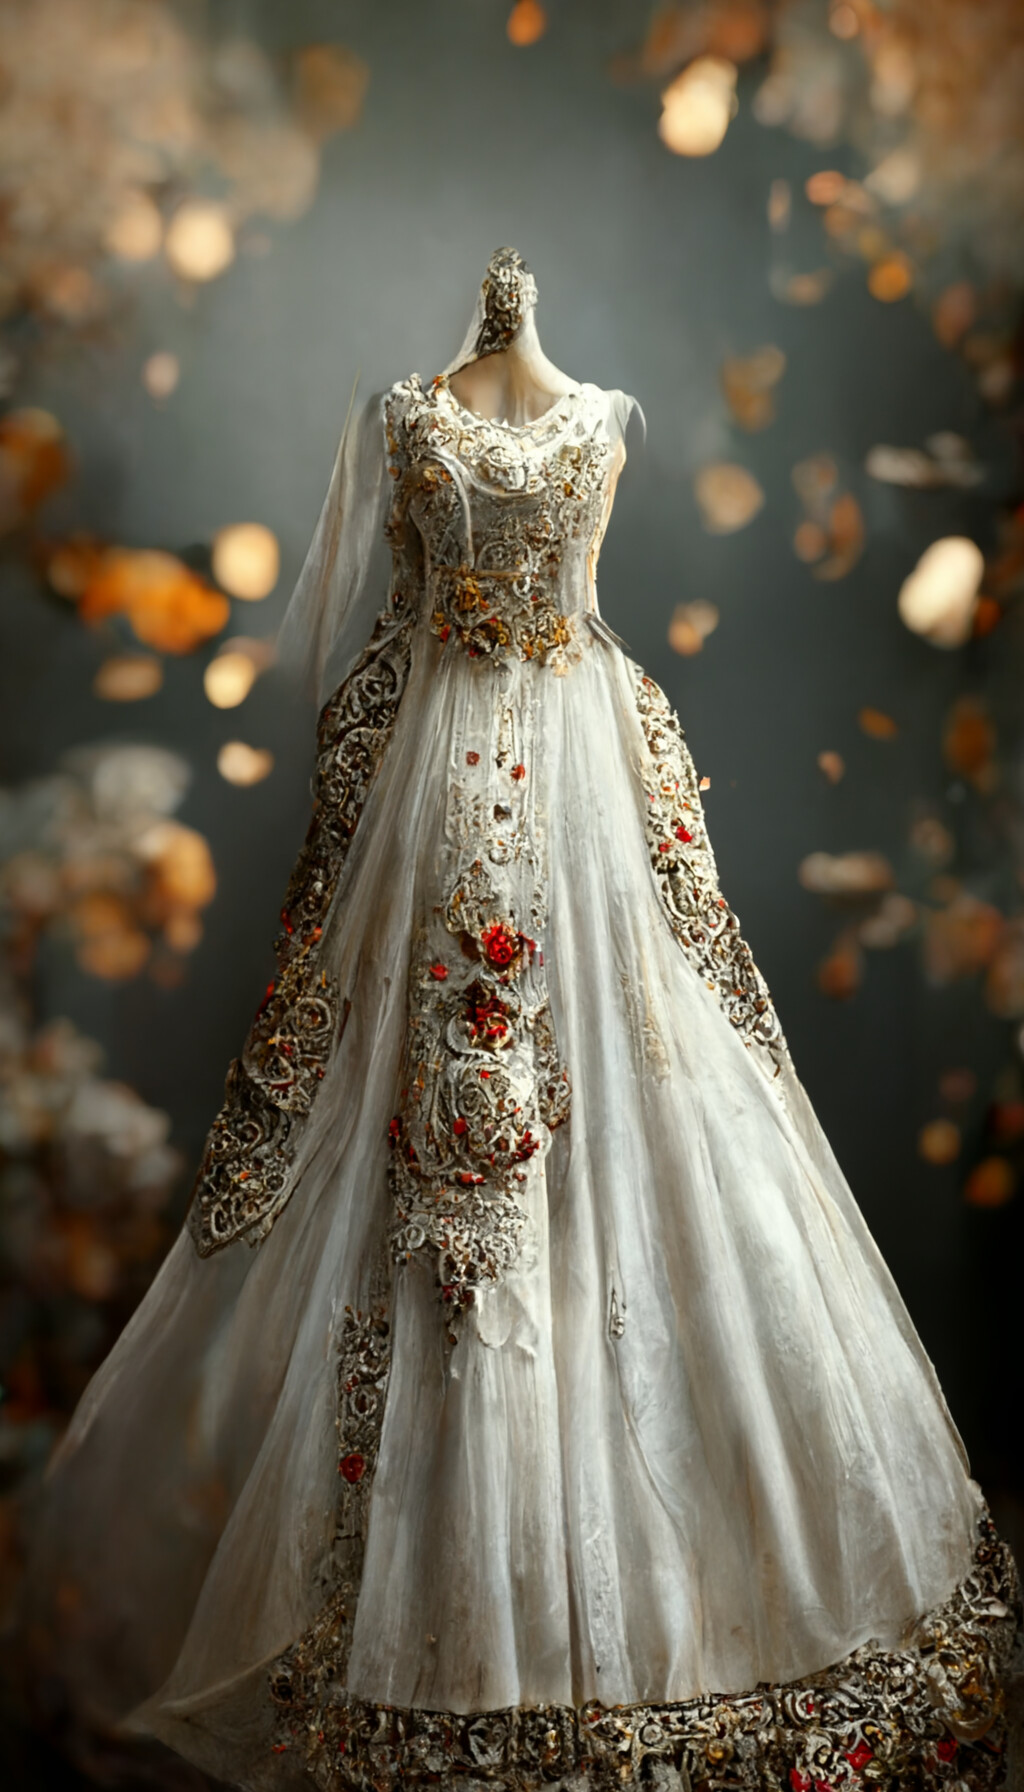 ArtStation - Fantasy wedding dresses